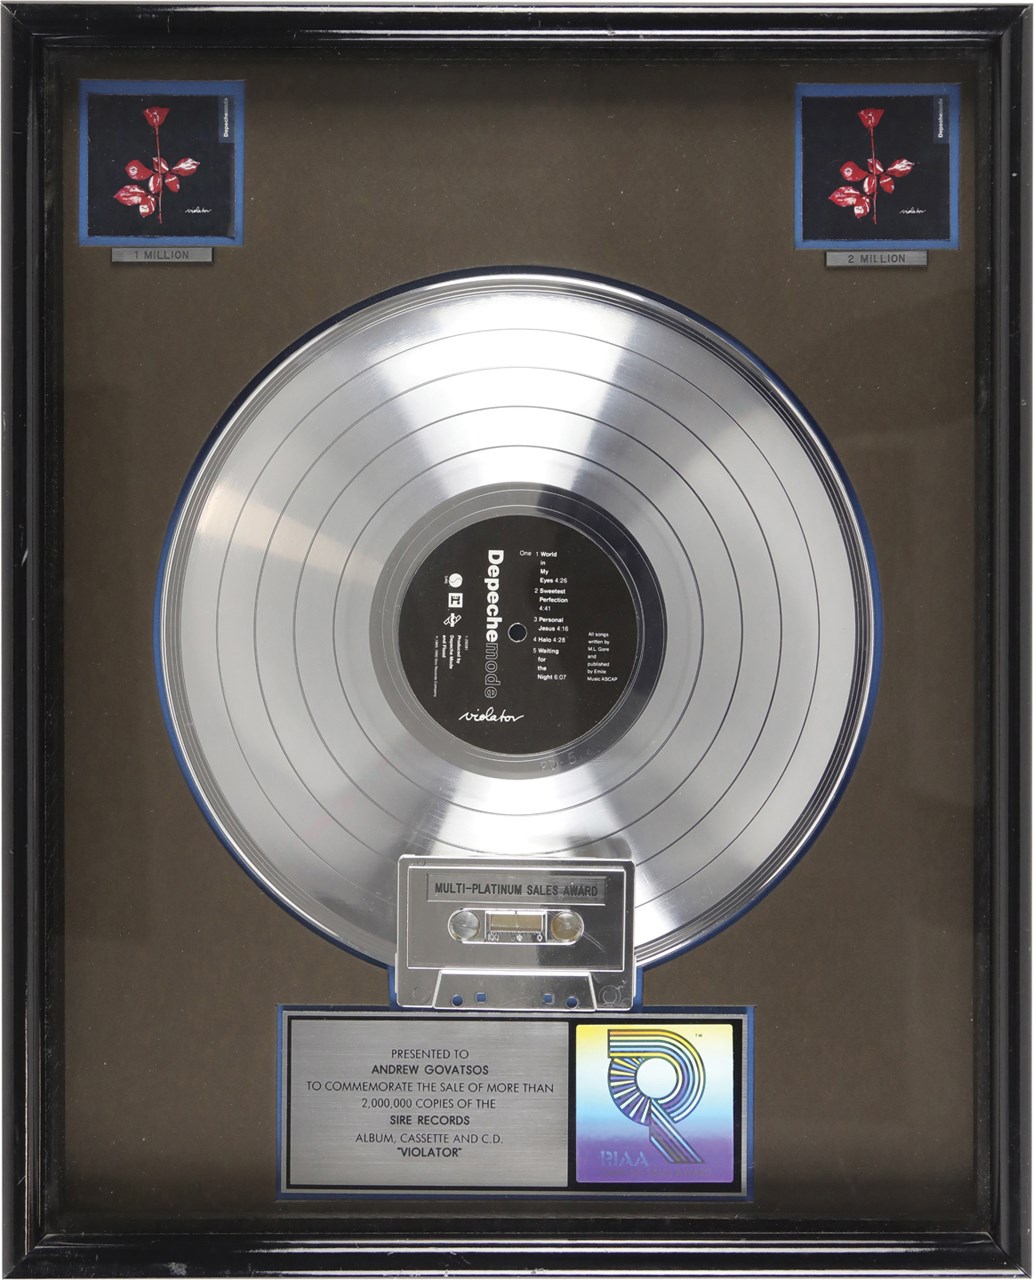 Depeche Mode "Violator" Double Platinum Record Sales Award